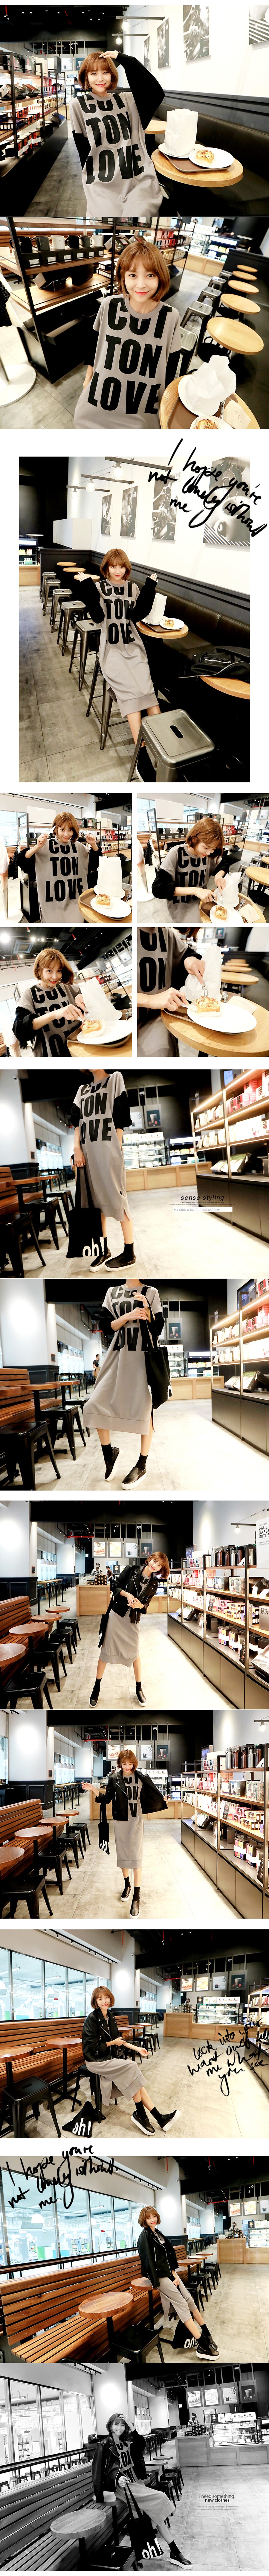 MAGZERO [限量销售] 黑袖宽松长裙 #咖啡色 均码(Free)